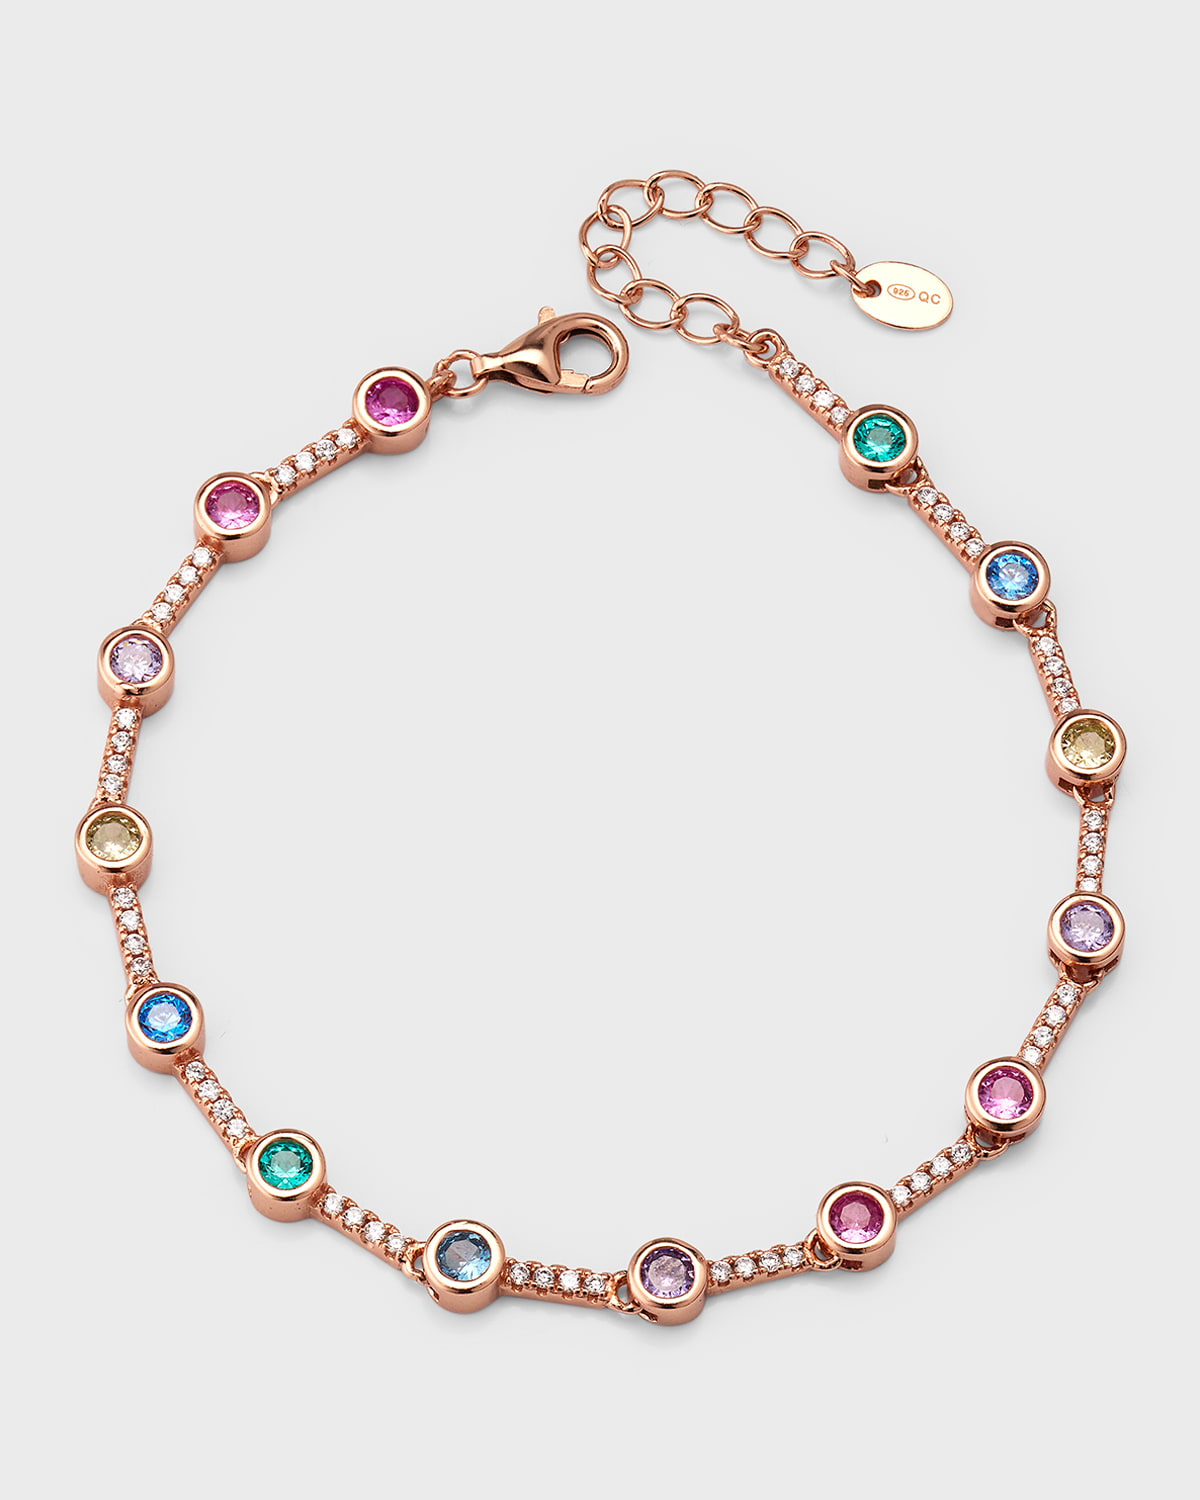 14k Rose Gold Cubic Zirconia Tennis Bracelet with Rainbow Stones